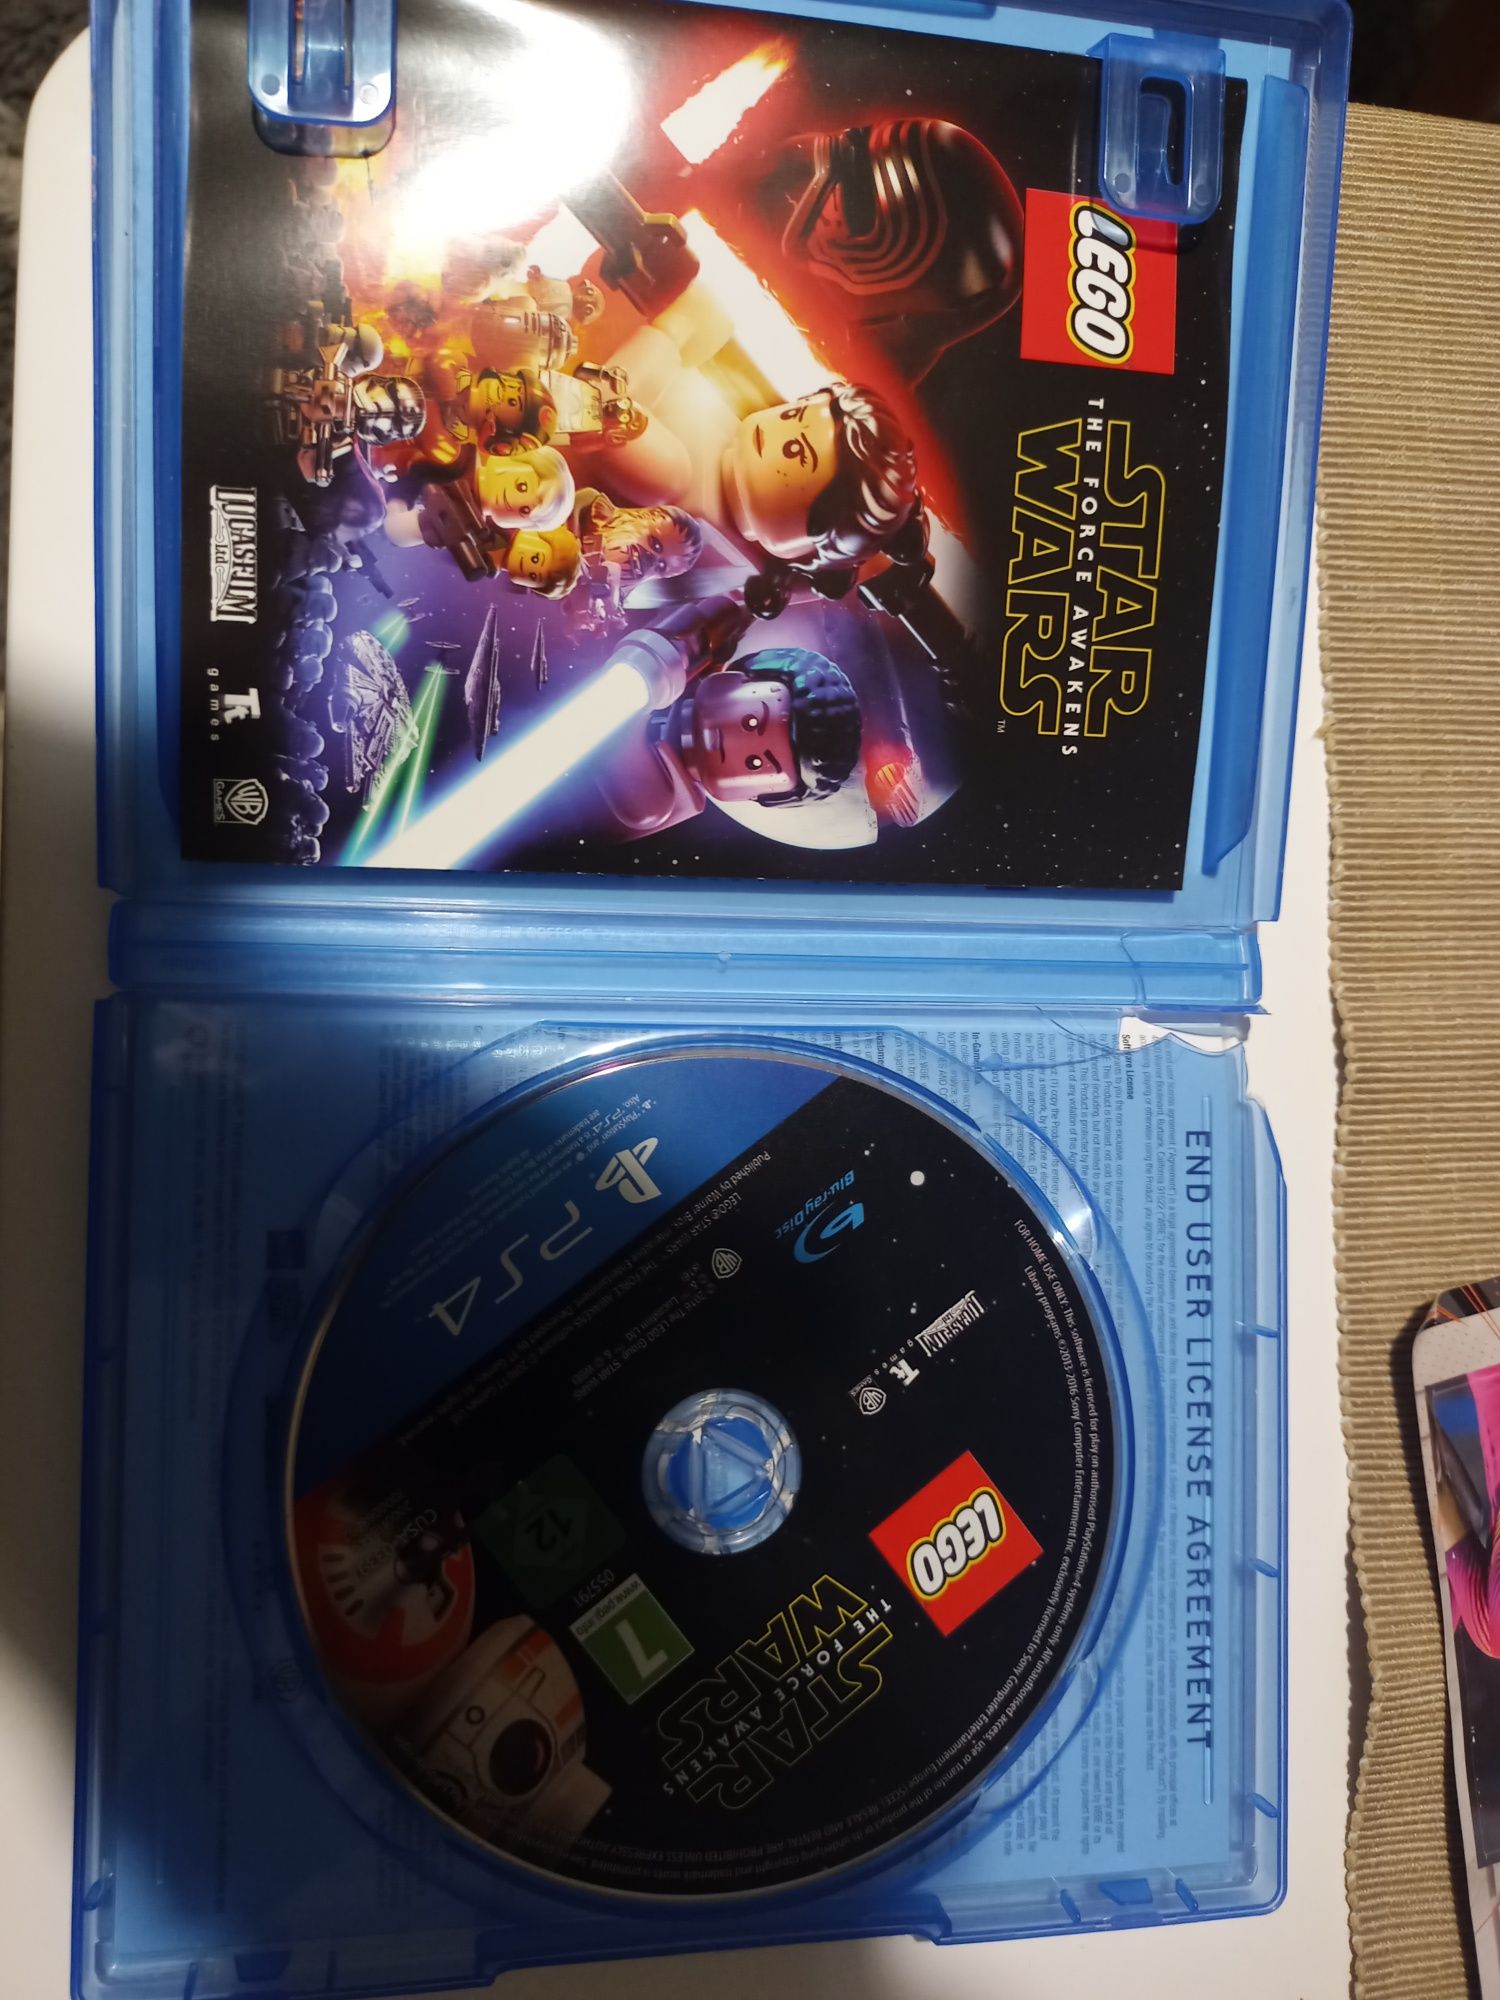 Gra Lego Star Wars PS4